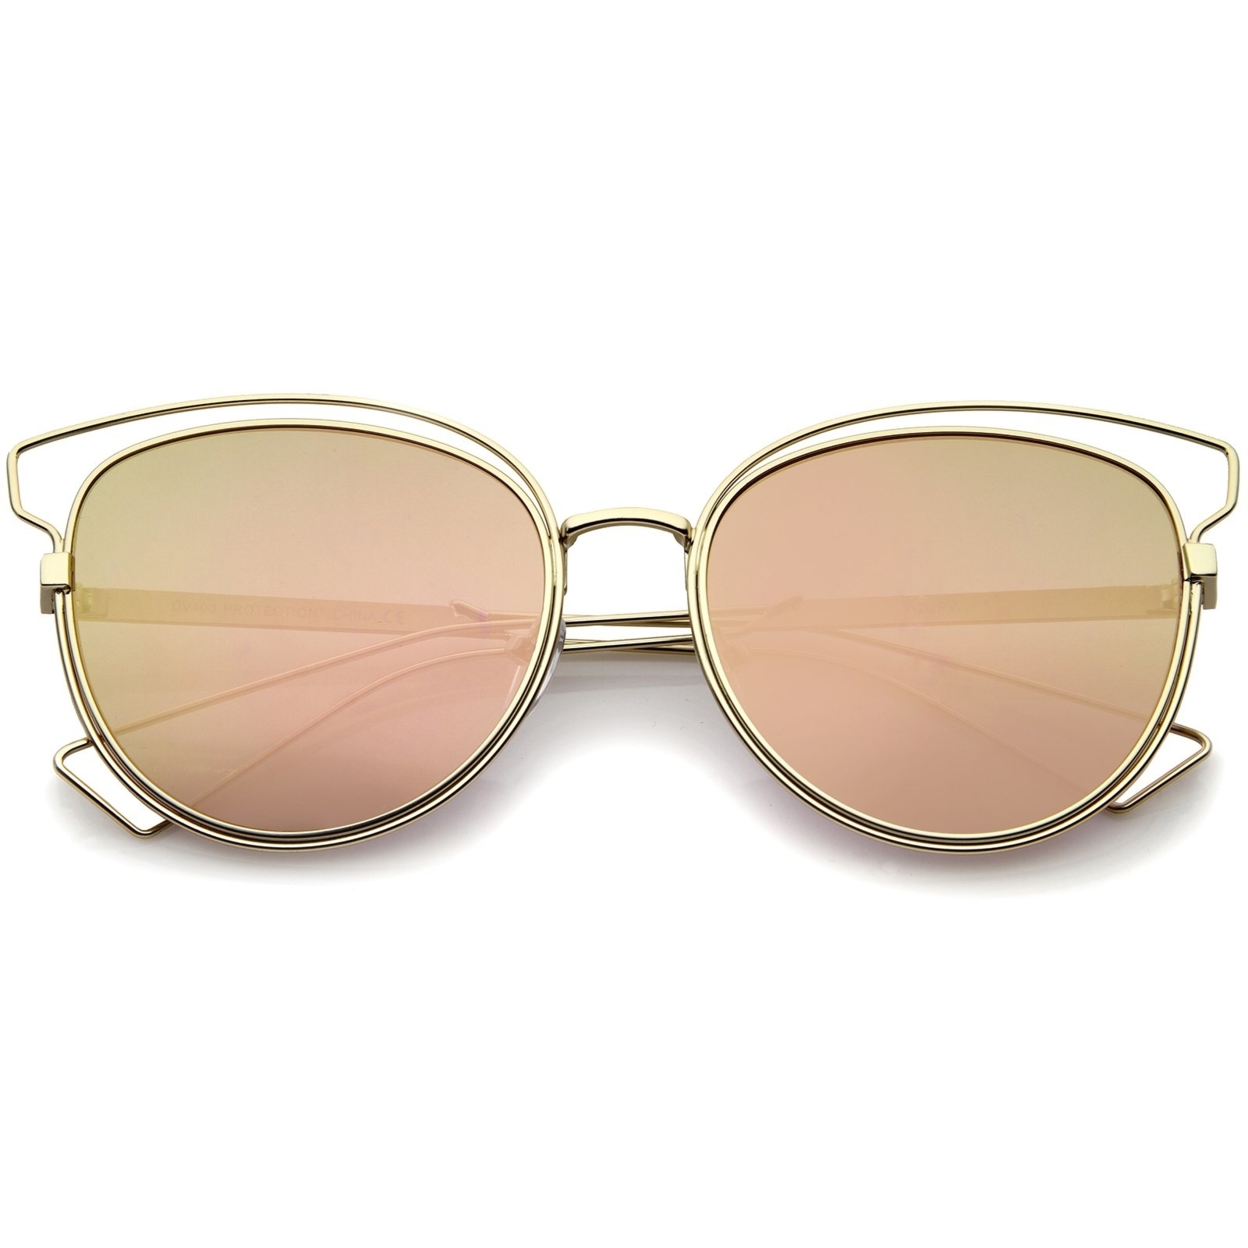 Womens Fashion Open Metal Frame Mirrored Lens Cat Eye Sunglasses 55mm - Gold / Pink Mirror